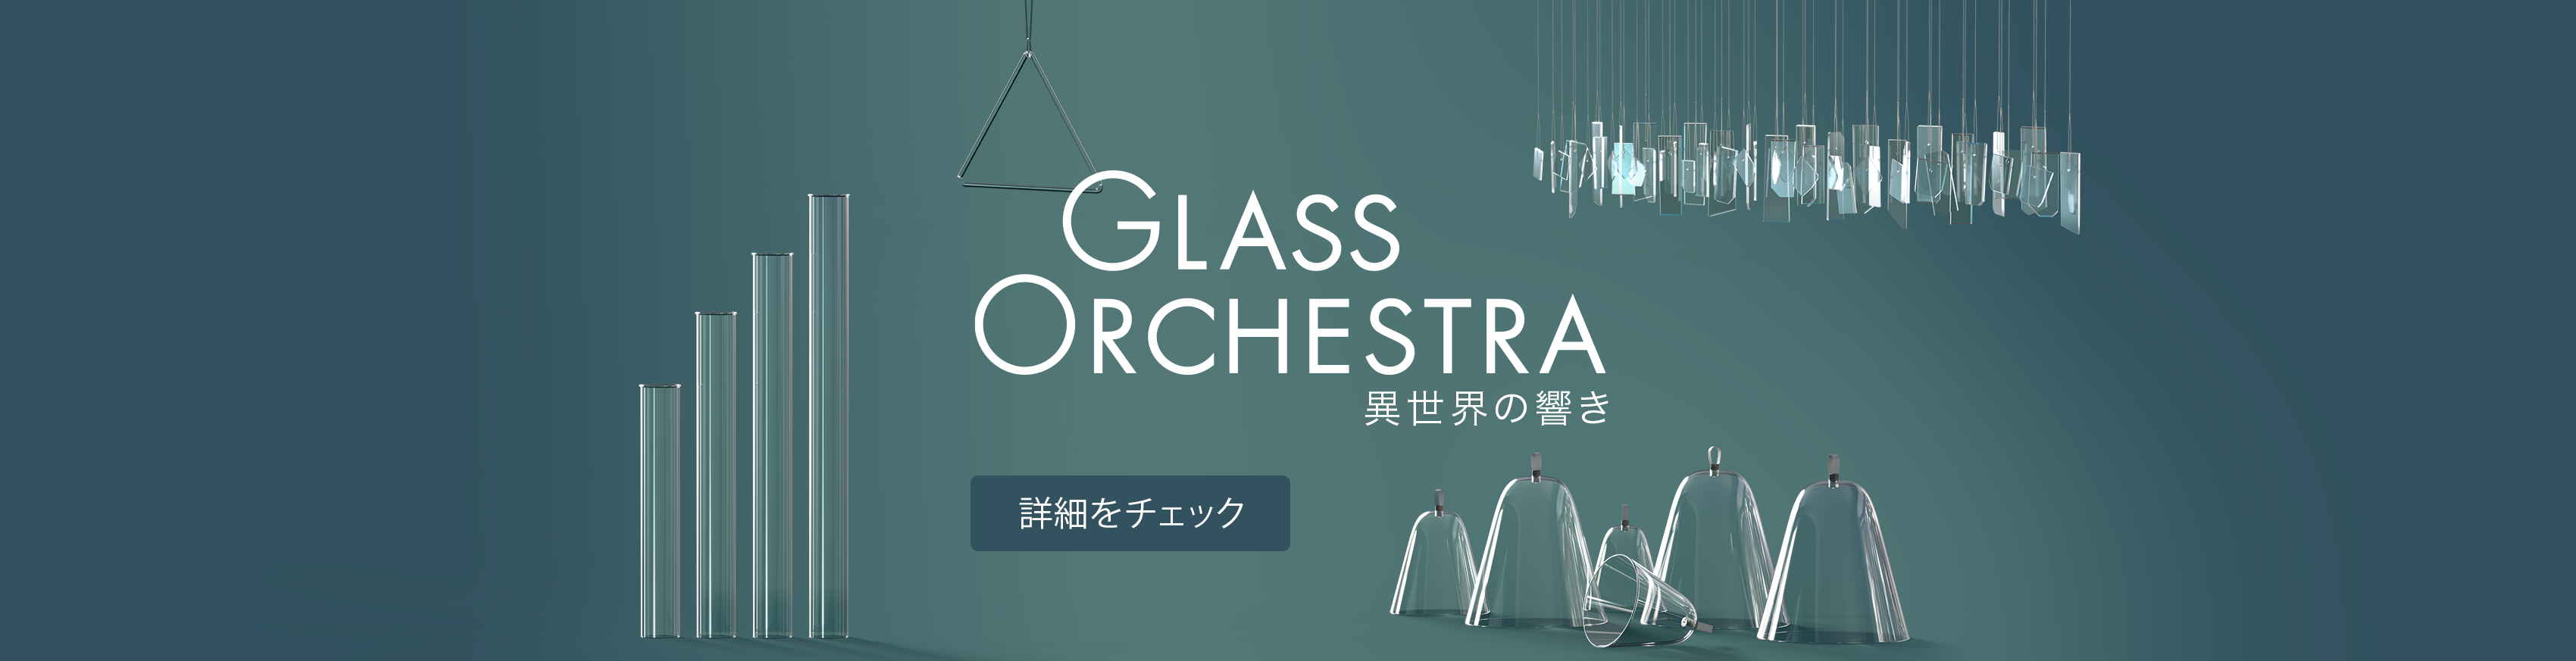 Glass Orchestra